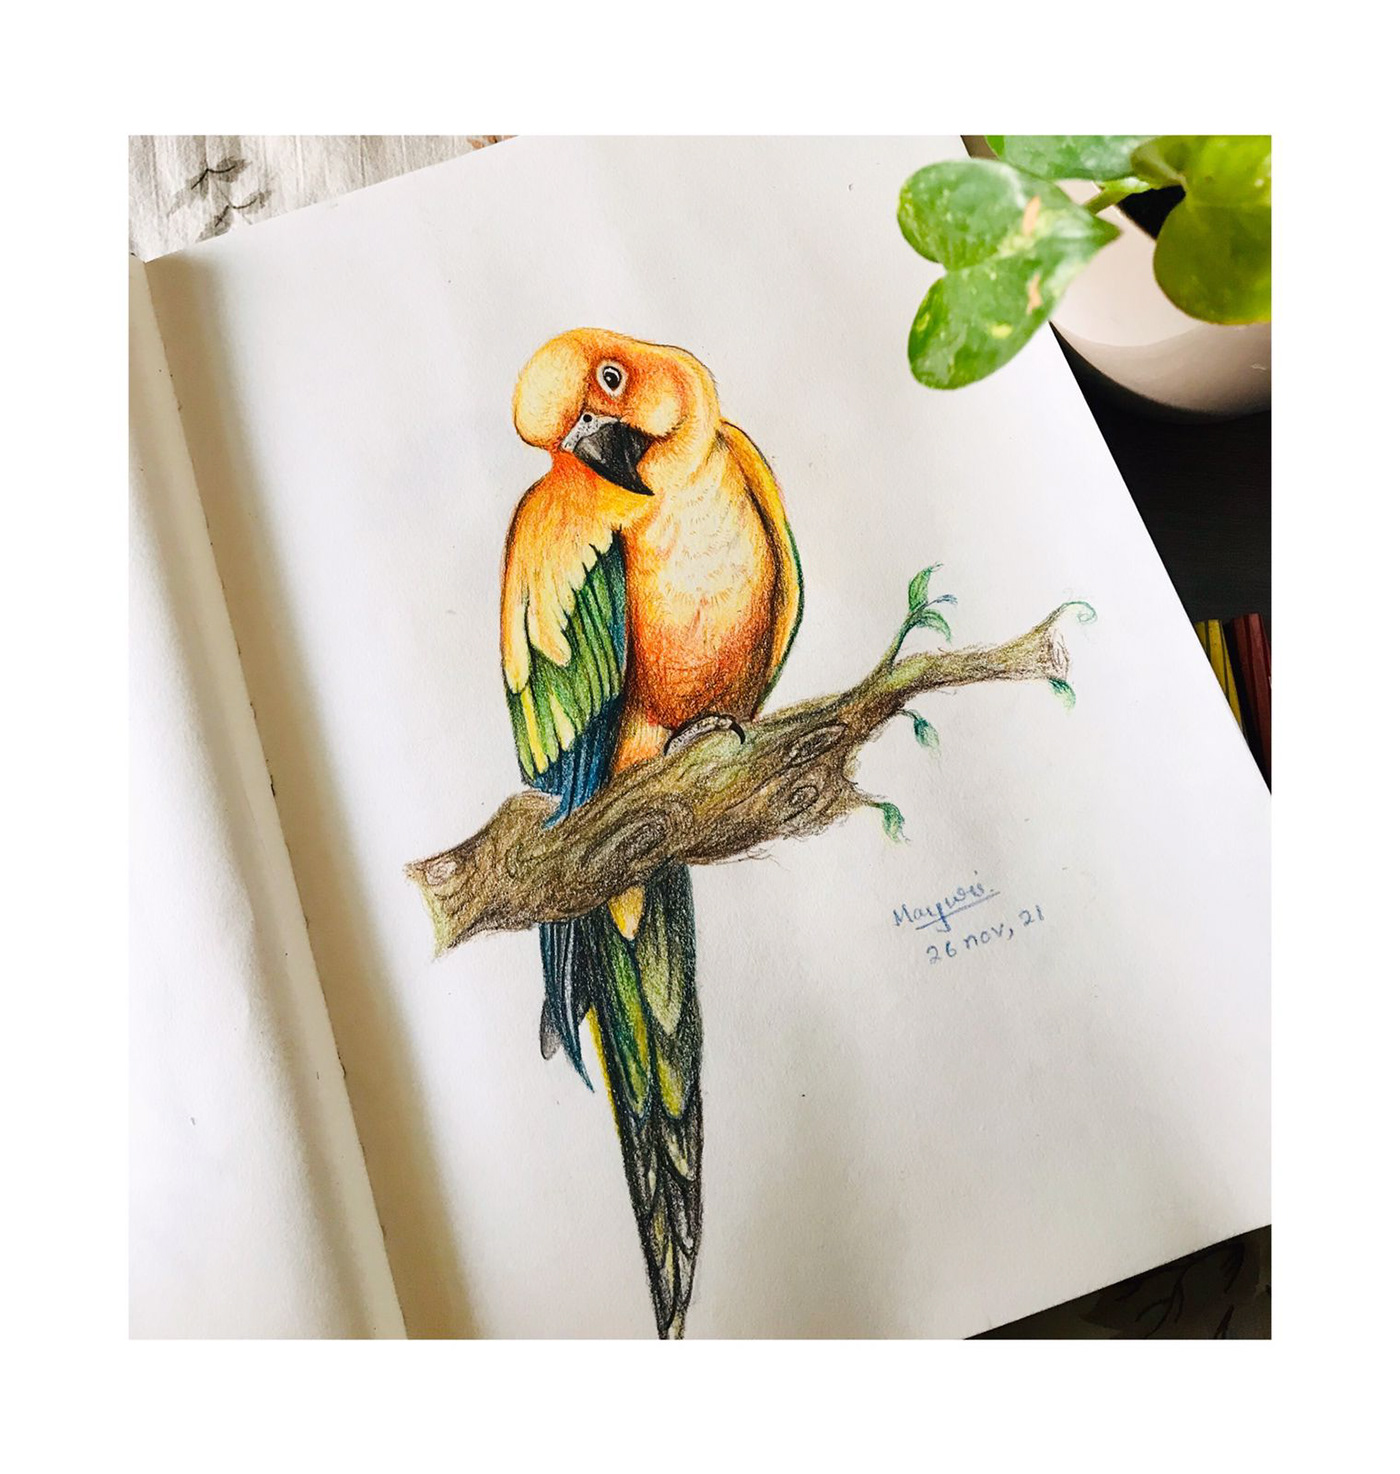 painting   artwork ILLUSTRATION  birds illustration bird Pencil drawing soft pastel watercolor artist